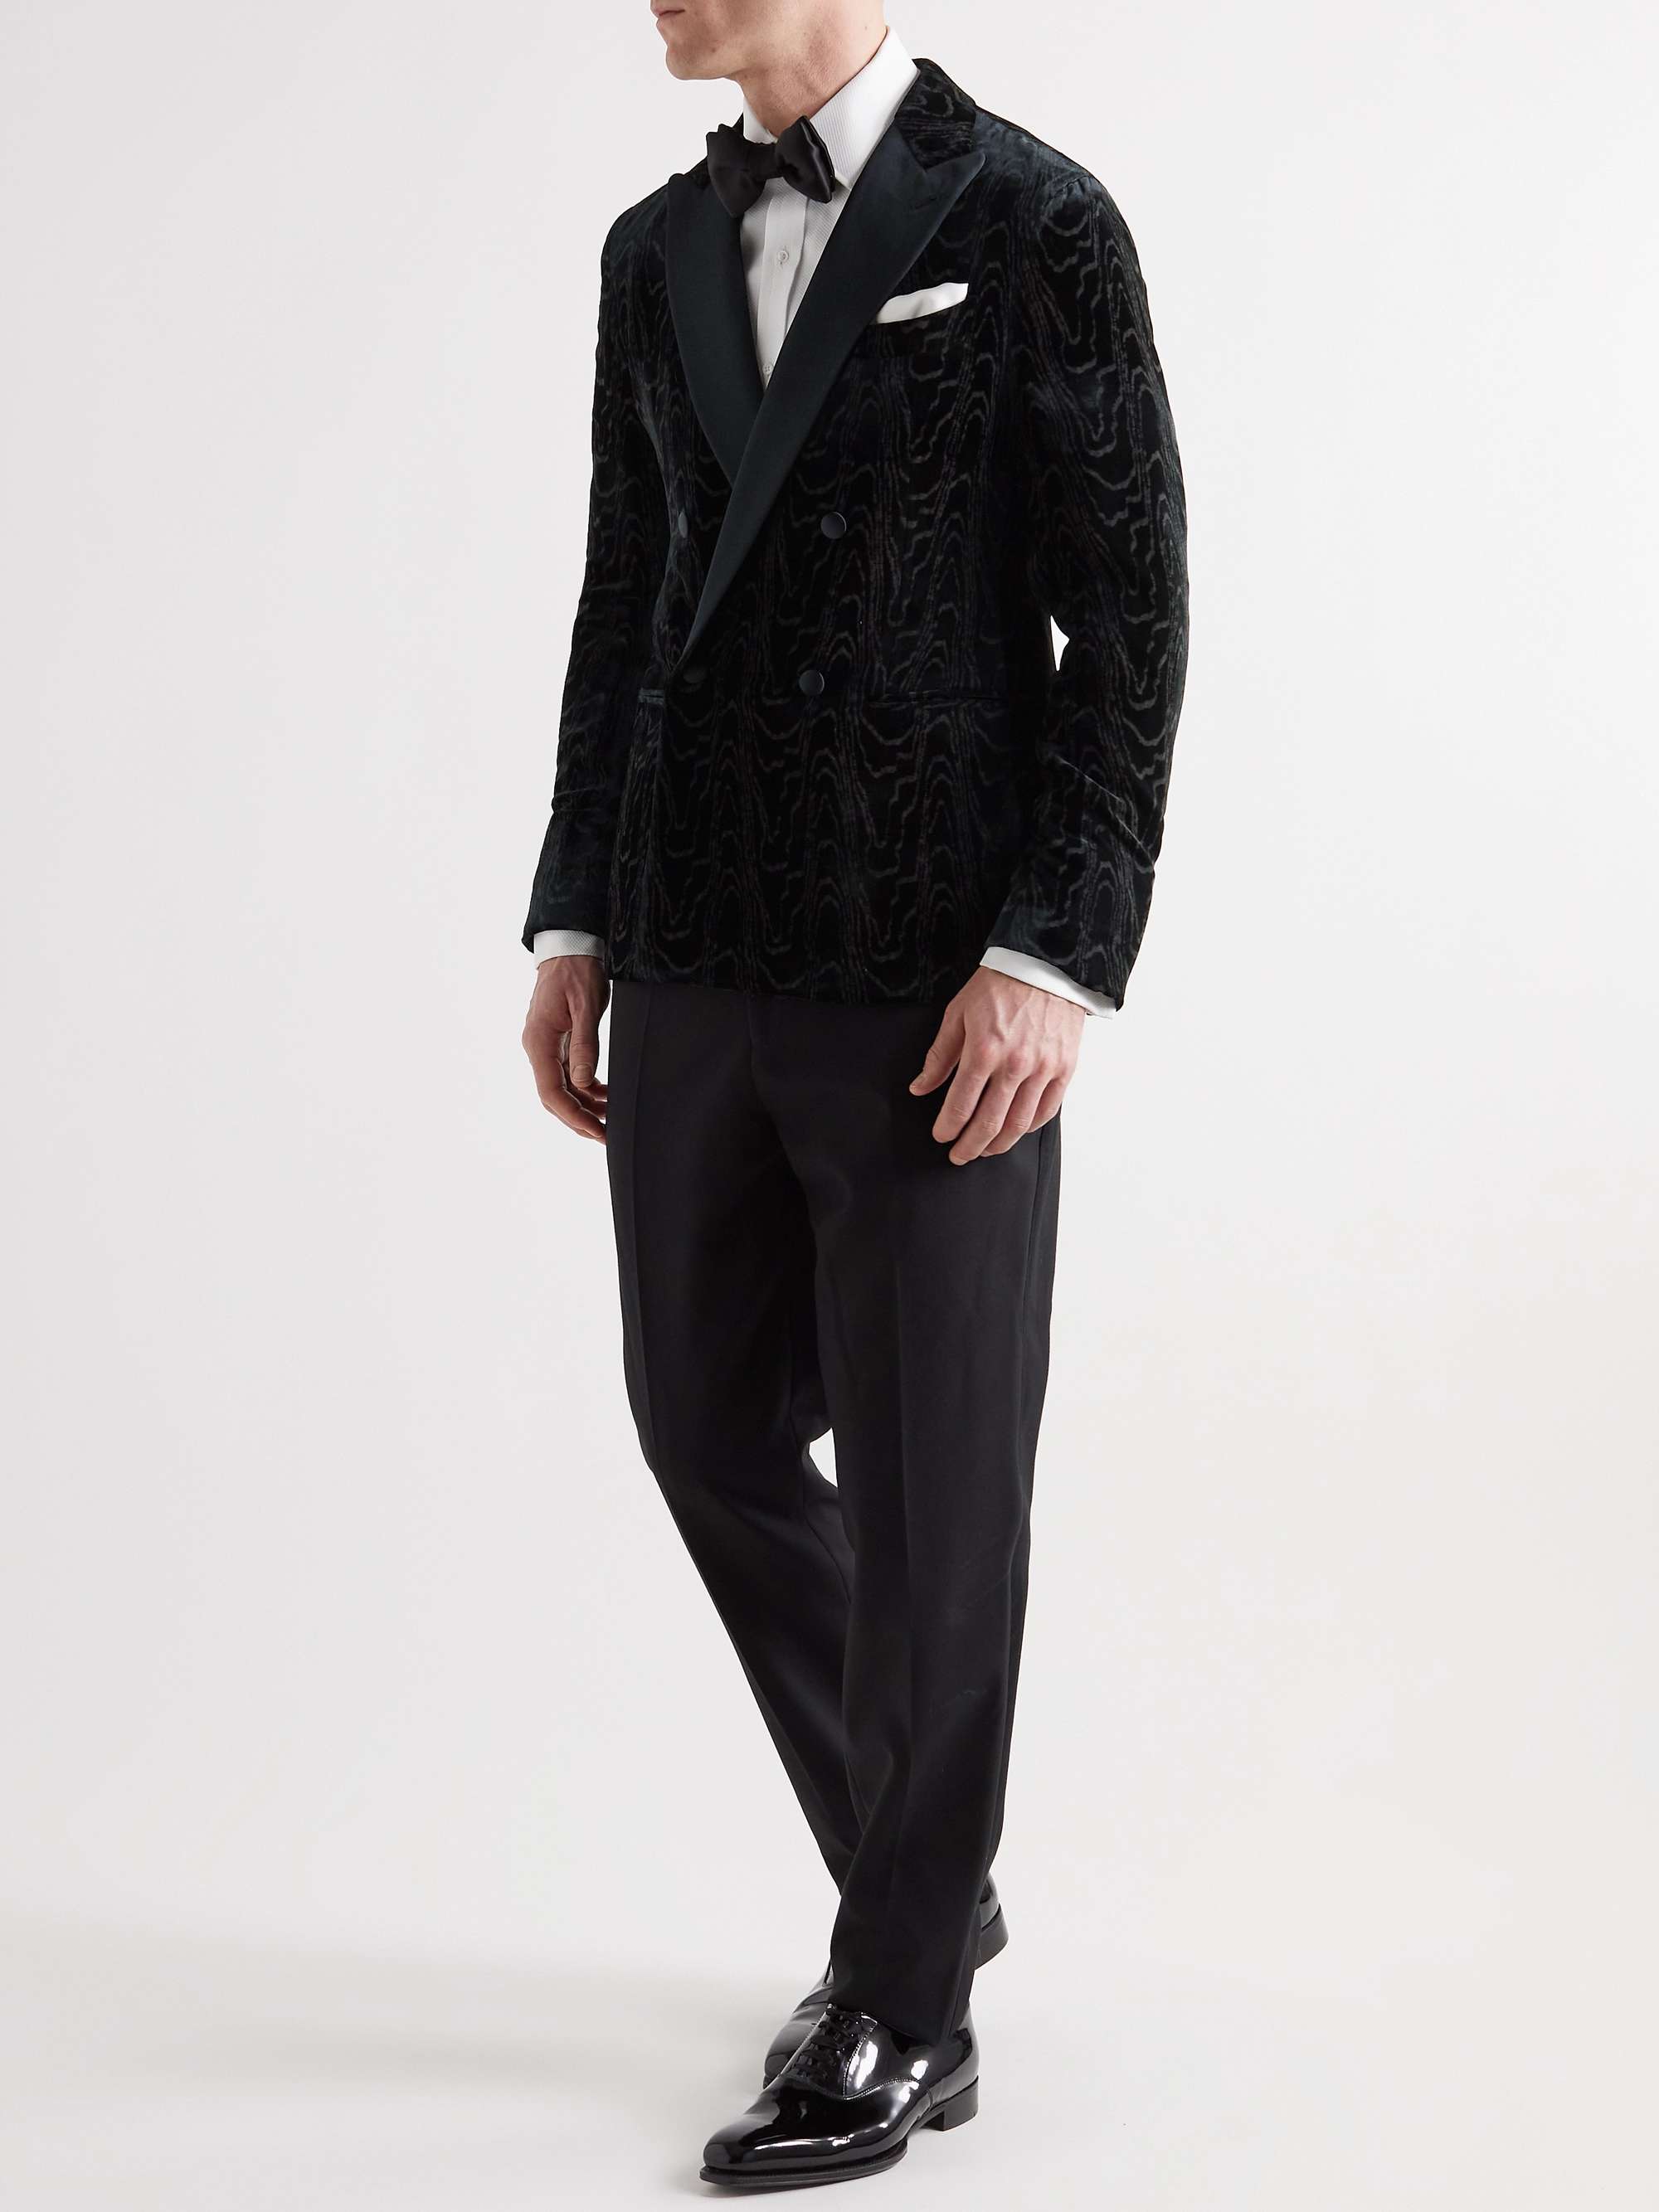 GIORGIO ARMANI Double-Breasted Silk-Trimmed Velvet Moire Tuxedo Jacket